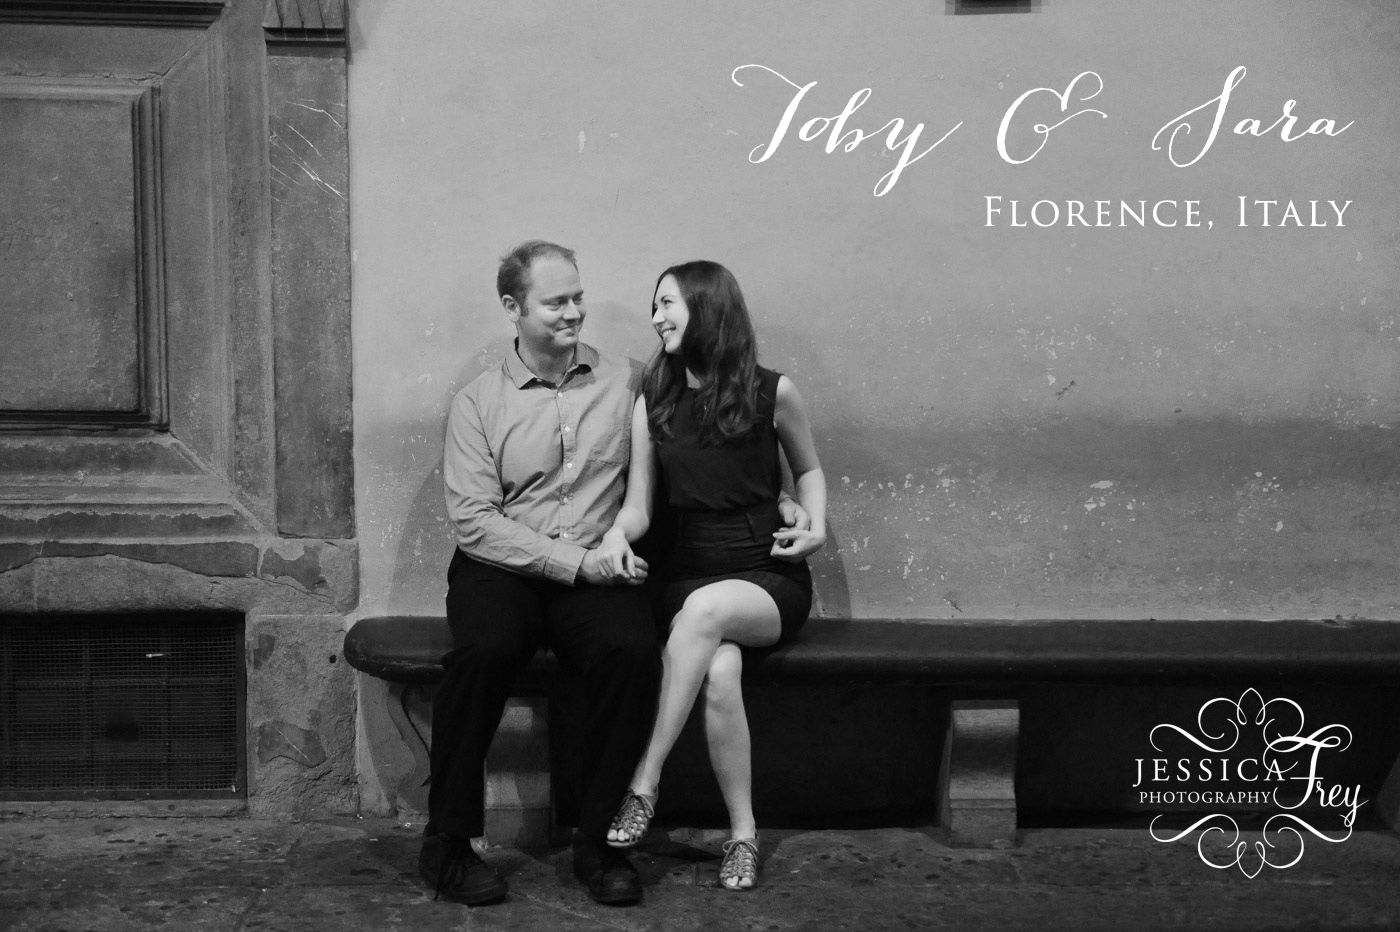 Jessica Frey Photography, Austin wedding photographer, Destination wedding photographer, Italy destination wedding photographer, Florence wedding photographer, Firenze wedding photographer